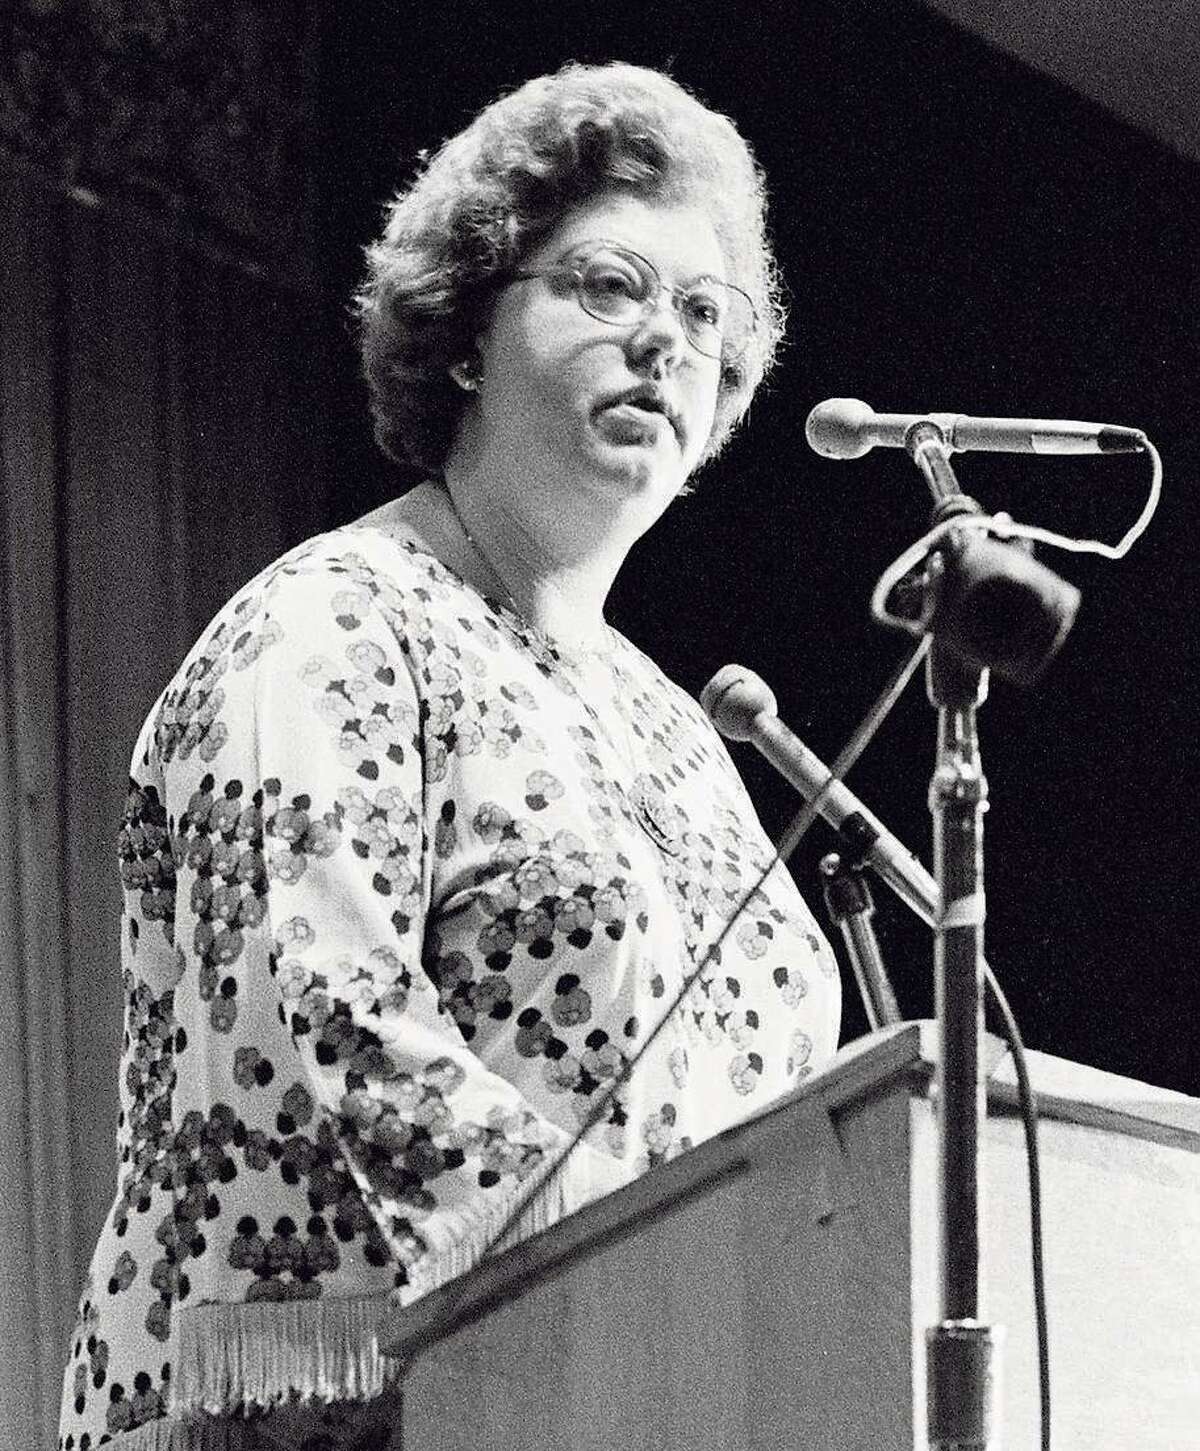 Joan-Marie Shelley speaks at a union gathering in 1971.